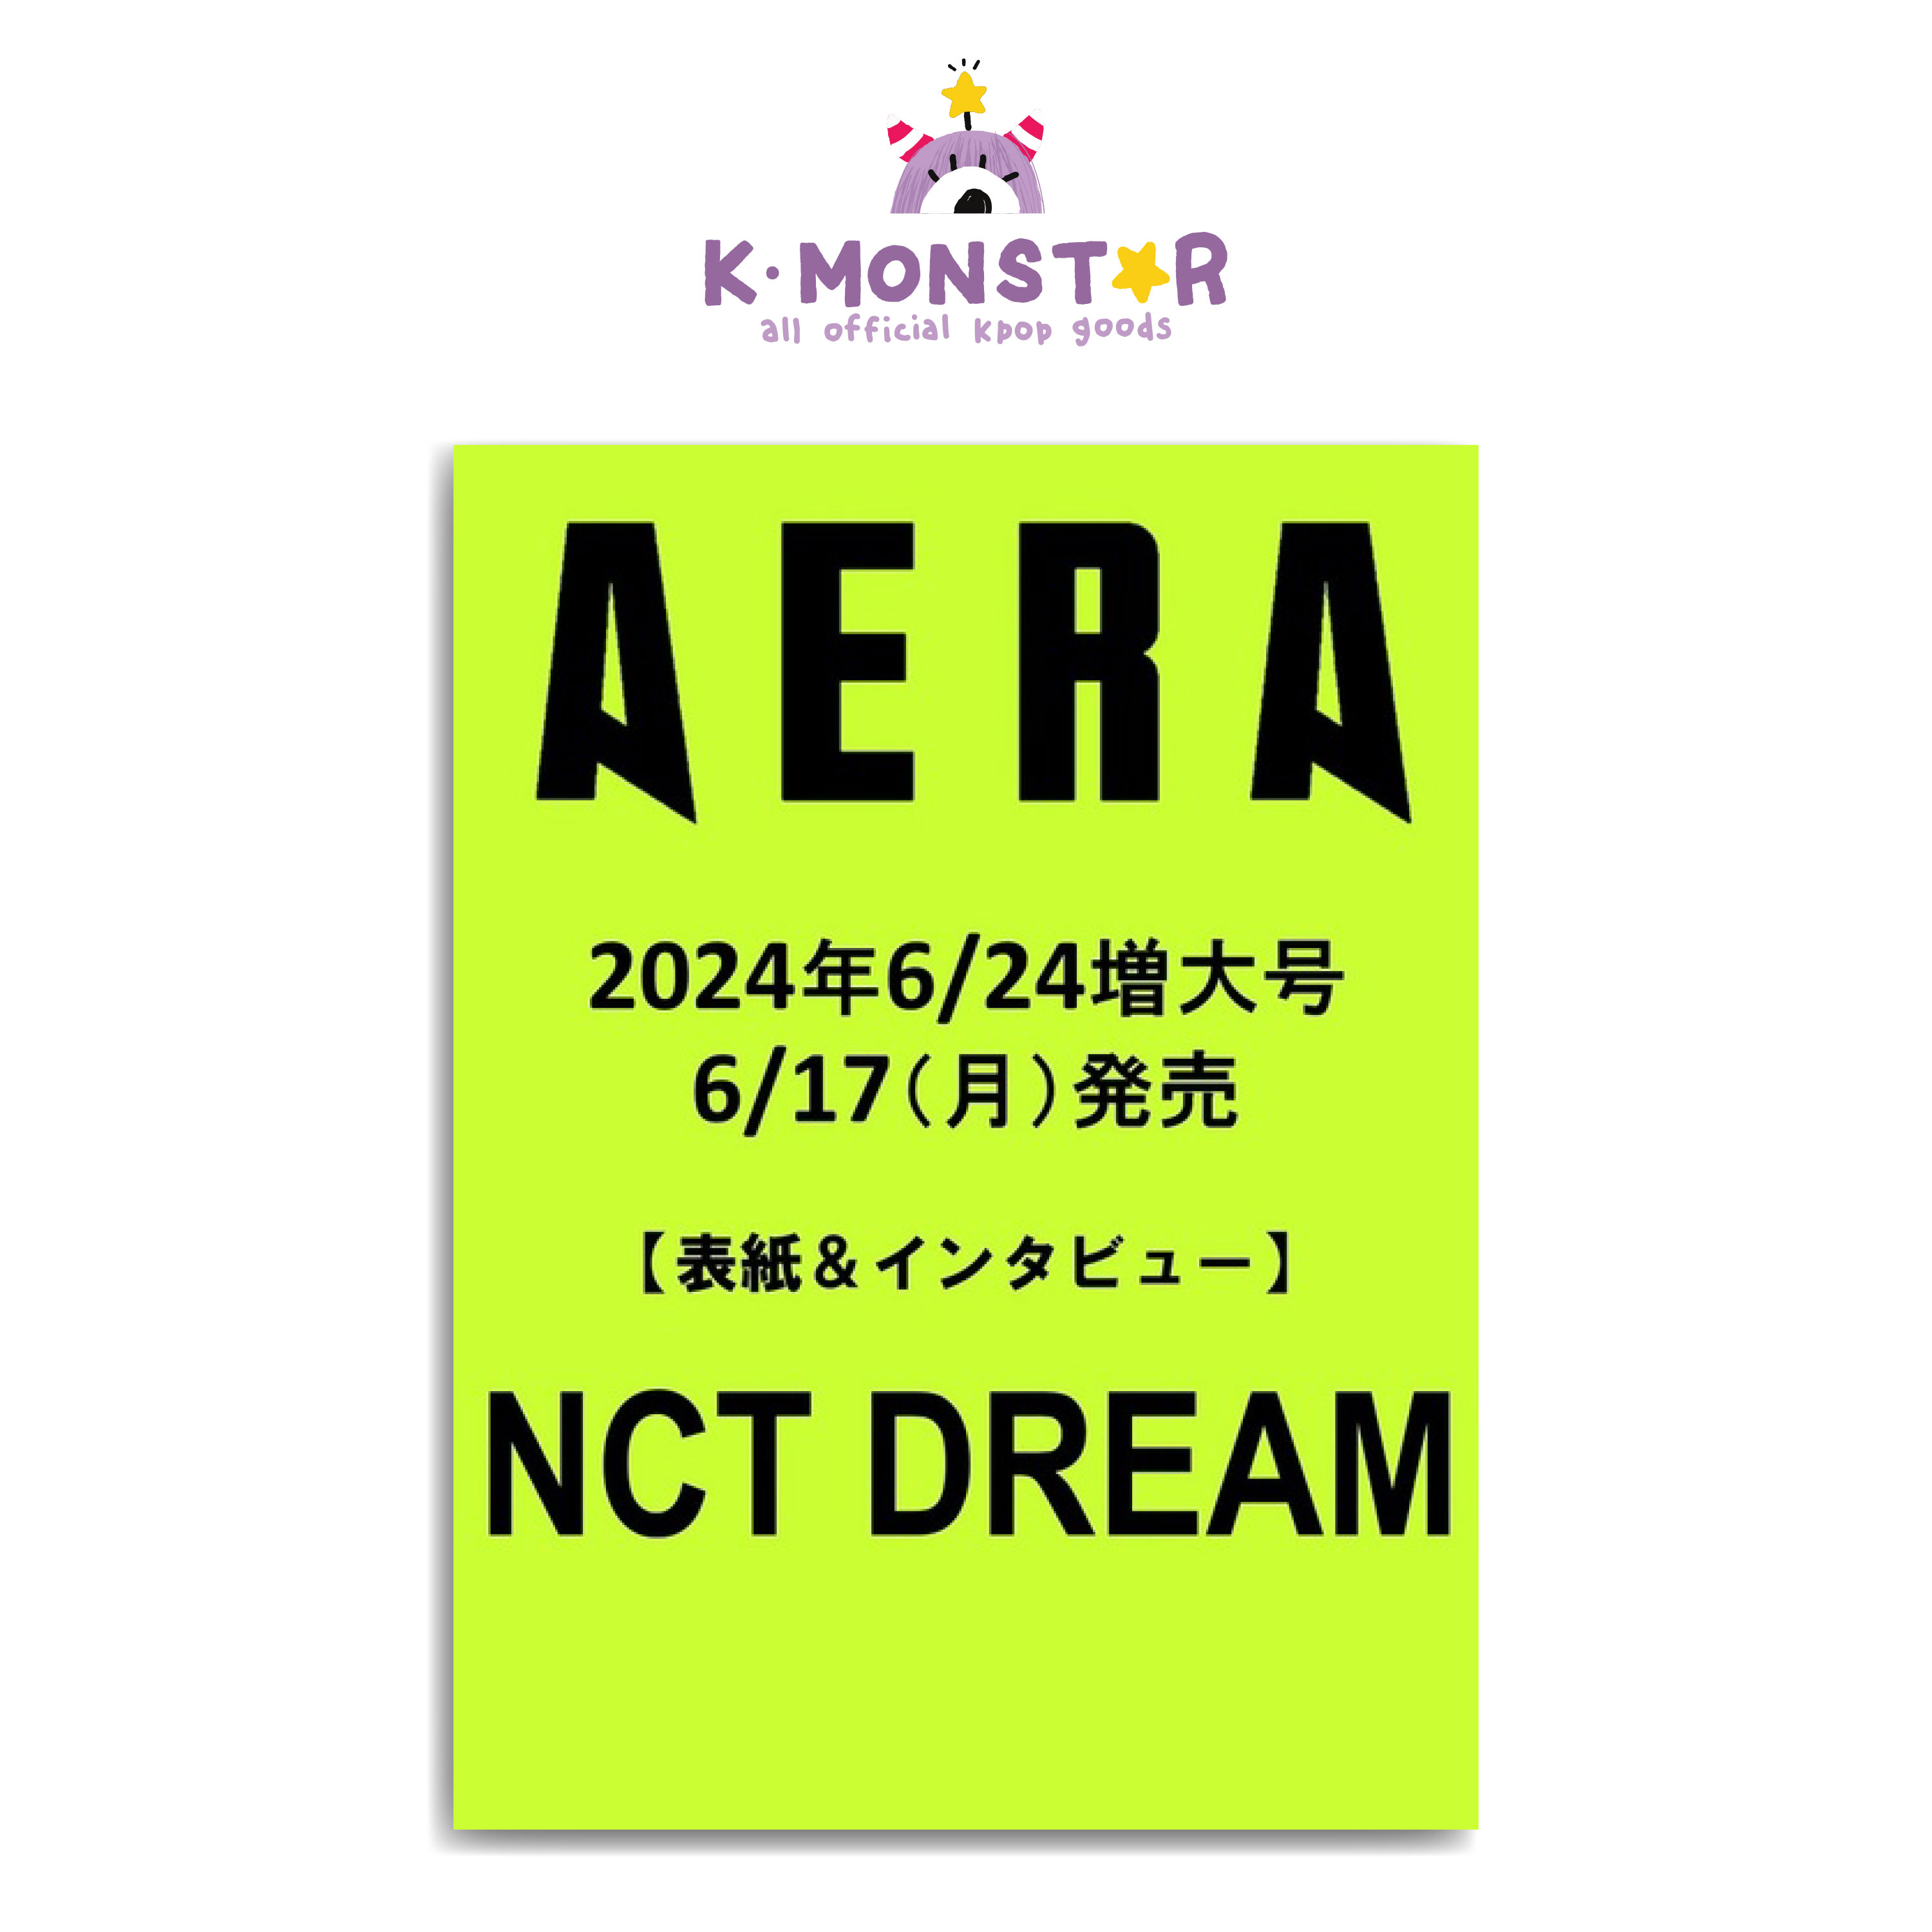 AERA JAPAN 2024年 6/24号 NCT DERAM 雑誌 magazine マガジン